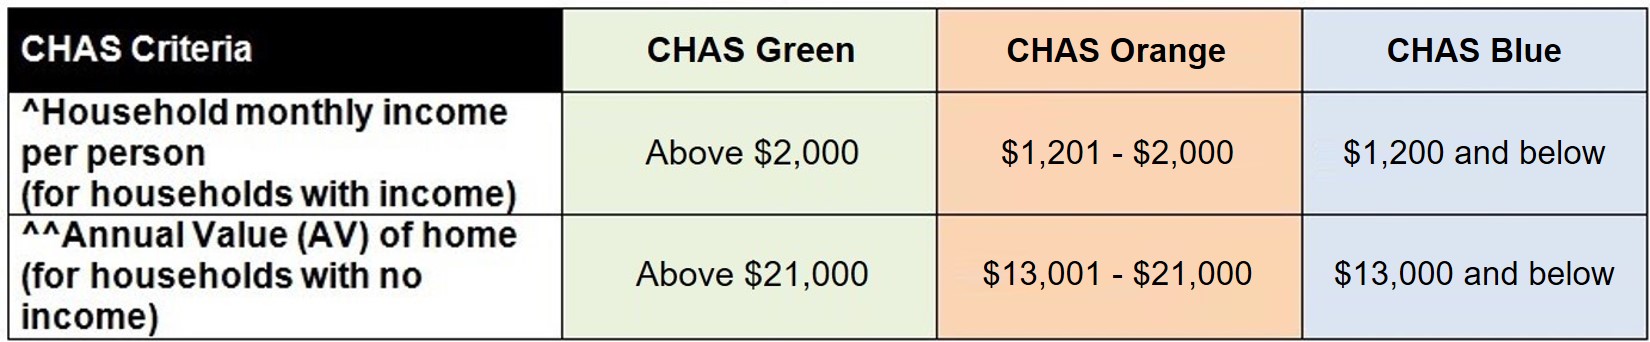 CHAS eligibility criteria table_1Nov